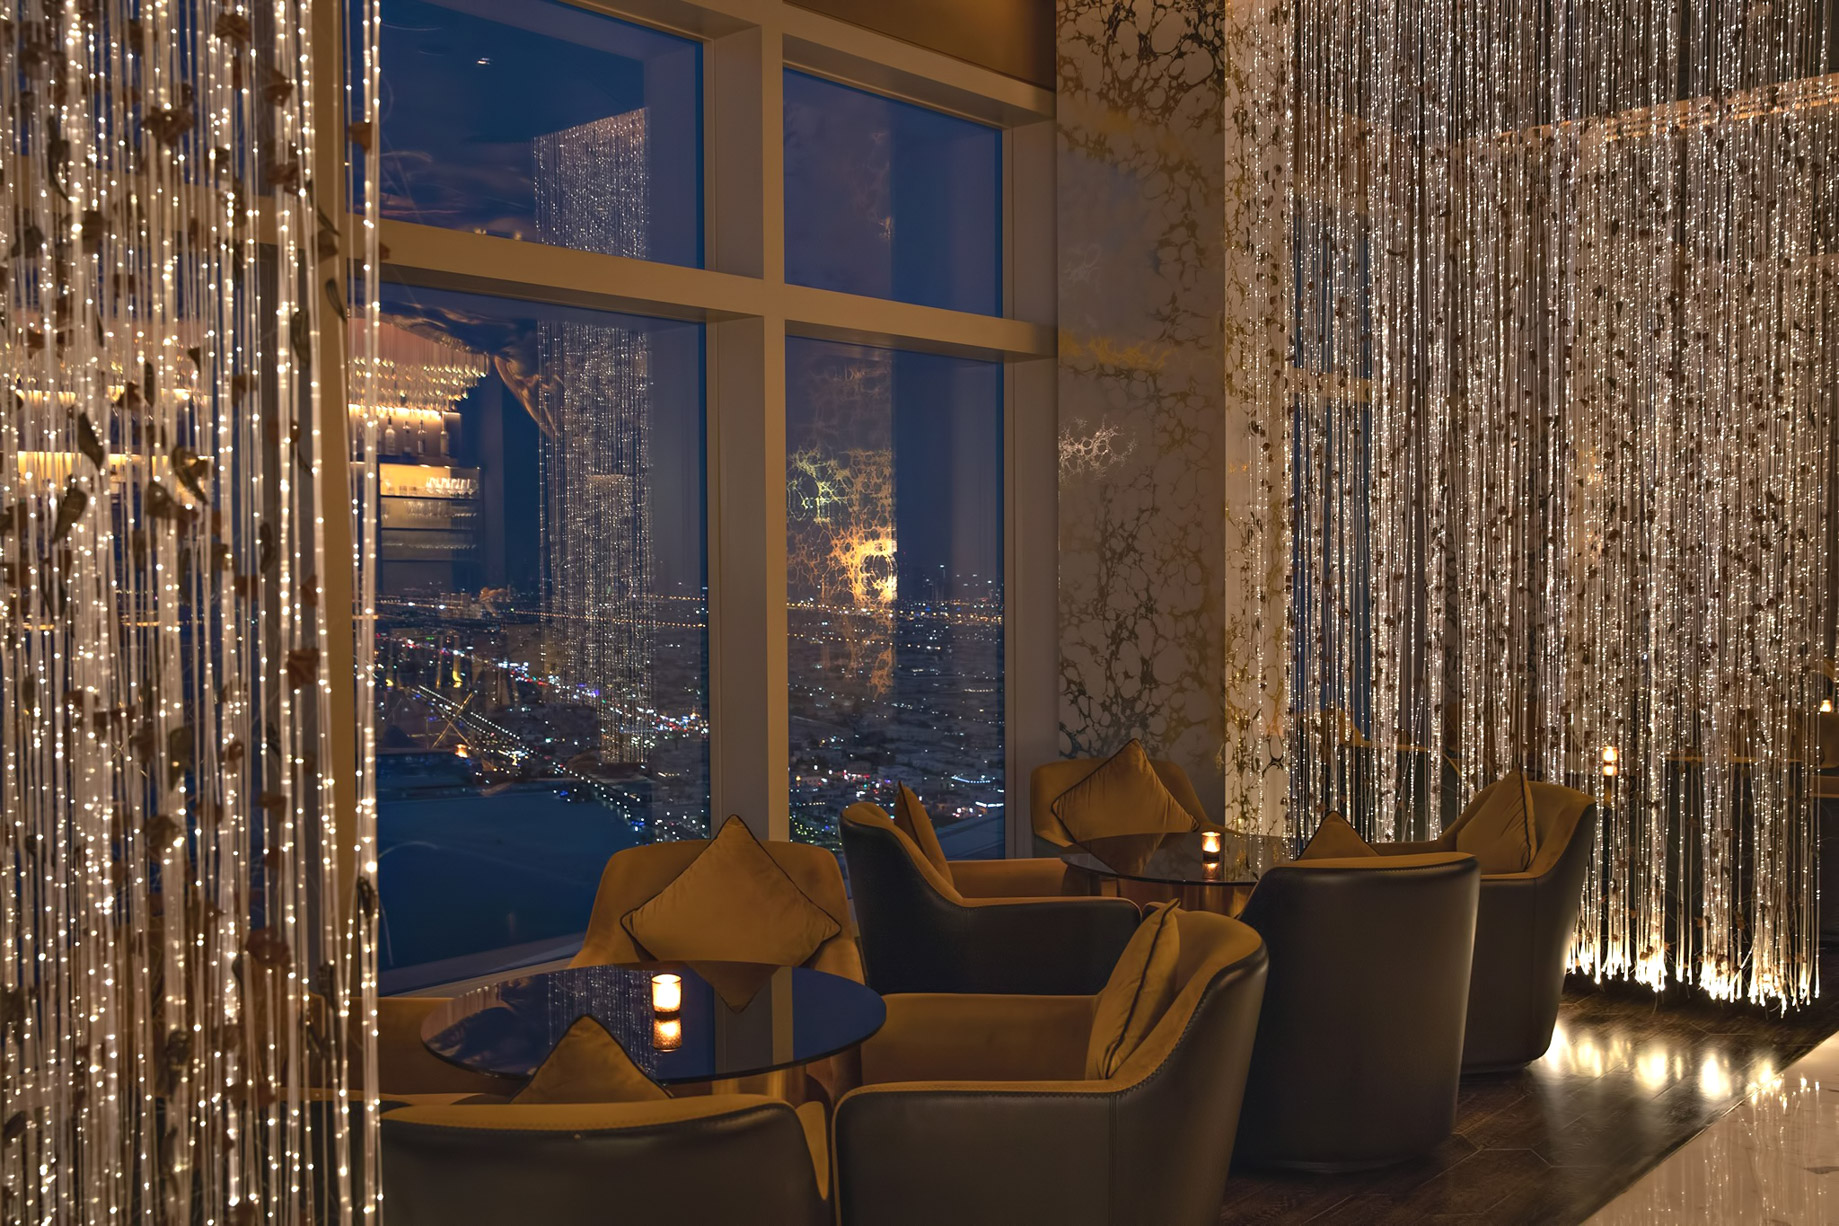 Burj Al Arab Jumeirah Hotel – Dubai, UAE – Gold on 27 Night City View